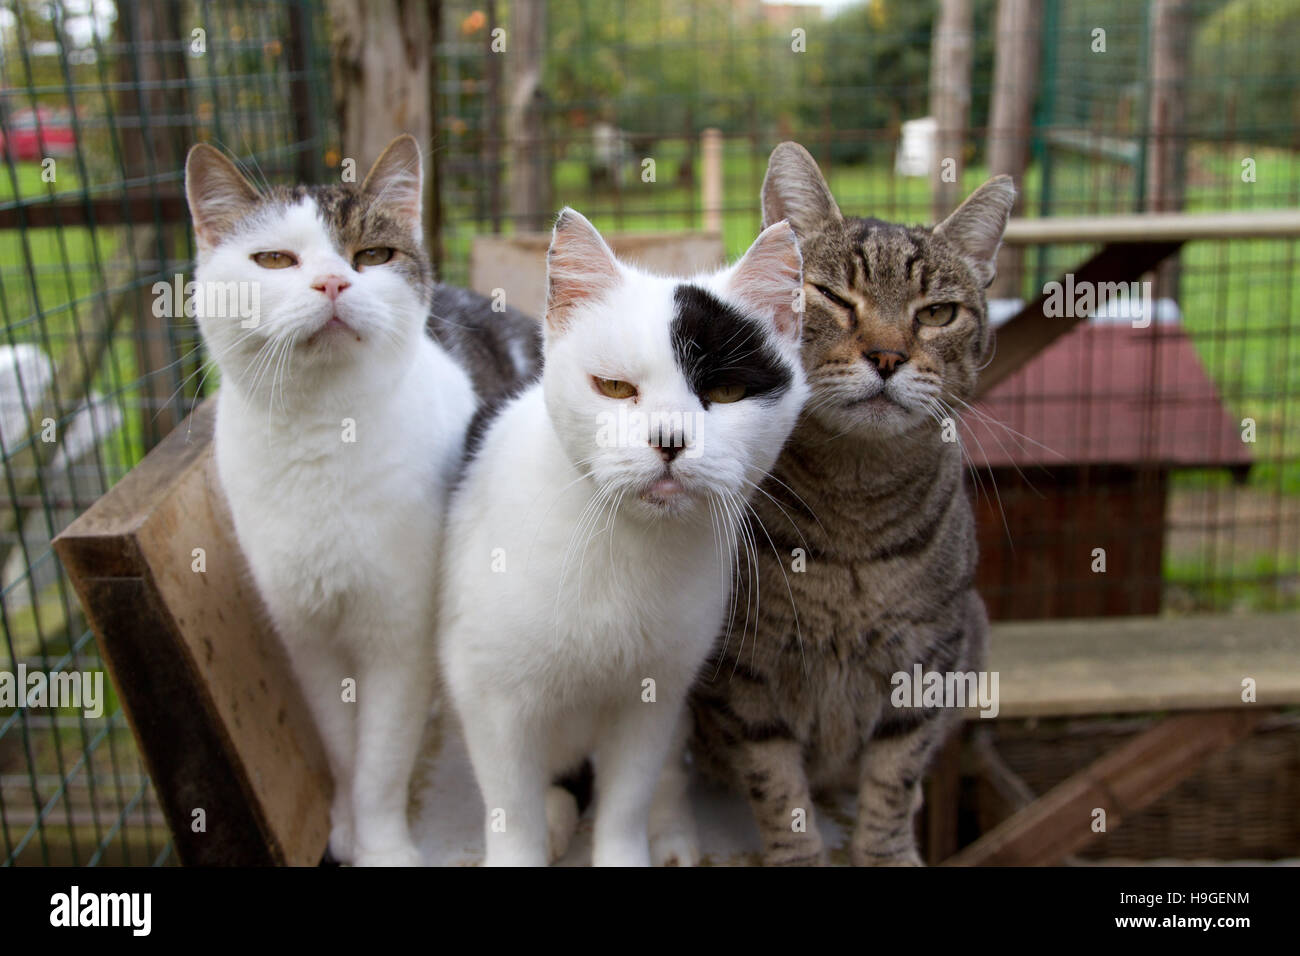 Three cats in the garden Stock Photo